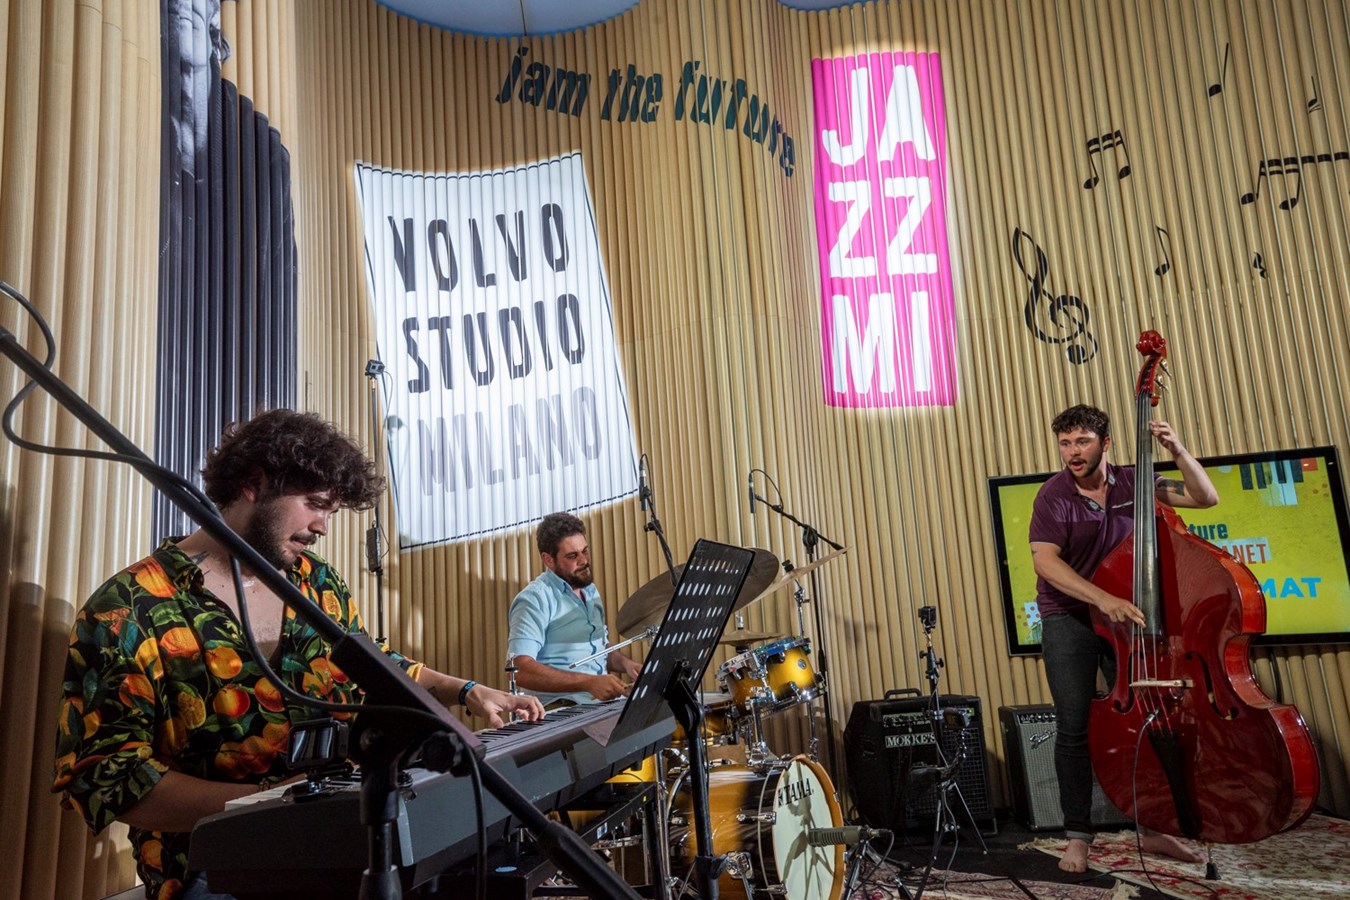 Volvo Studio Milano - 25 giugno 2019 Jazzmi Maisemat